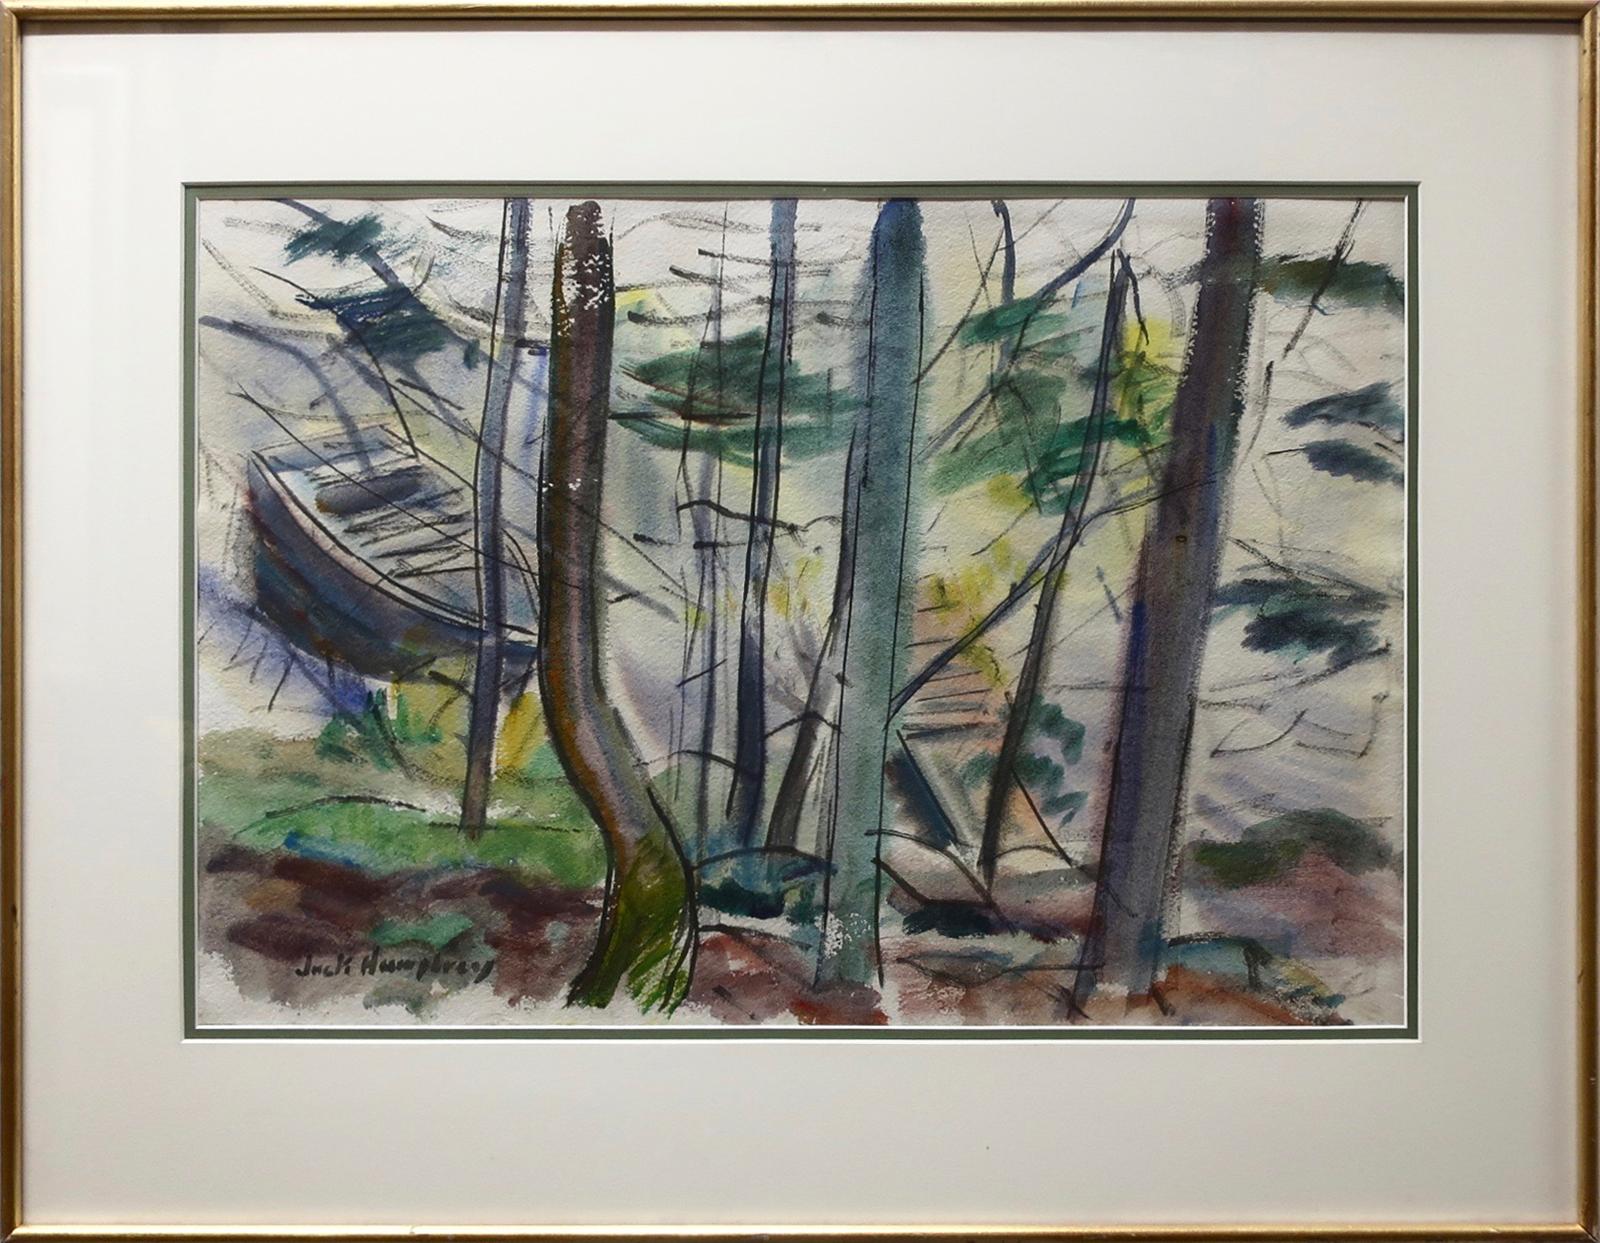 Jack Weldon Humphrey (1901-1967) - Untitled (Boat Thru Trees)